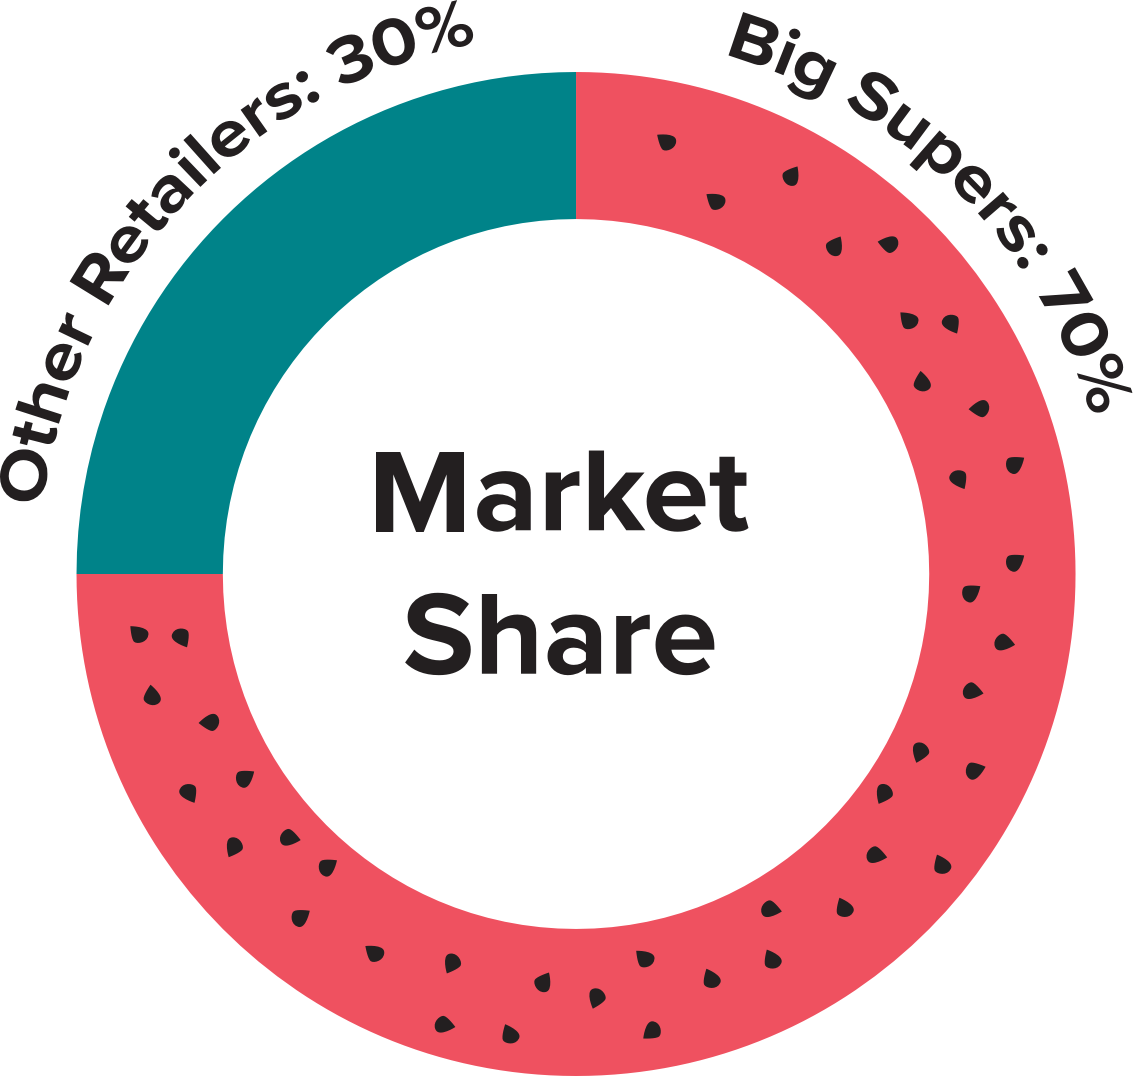 Market Share. Big super 70%, Other Retailer 30%